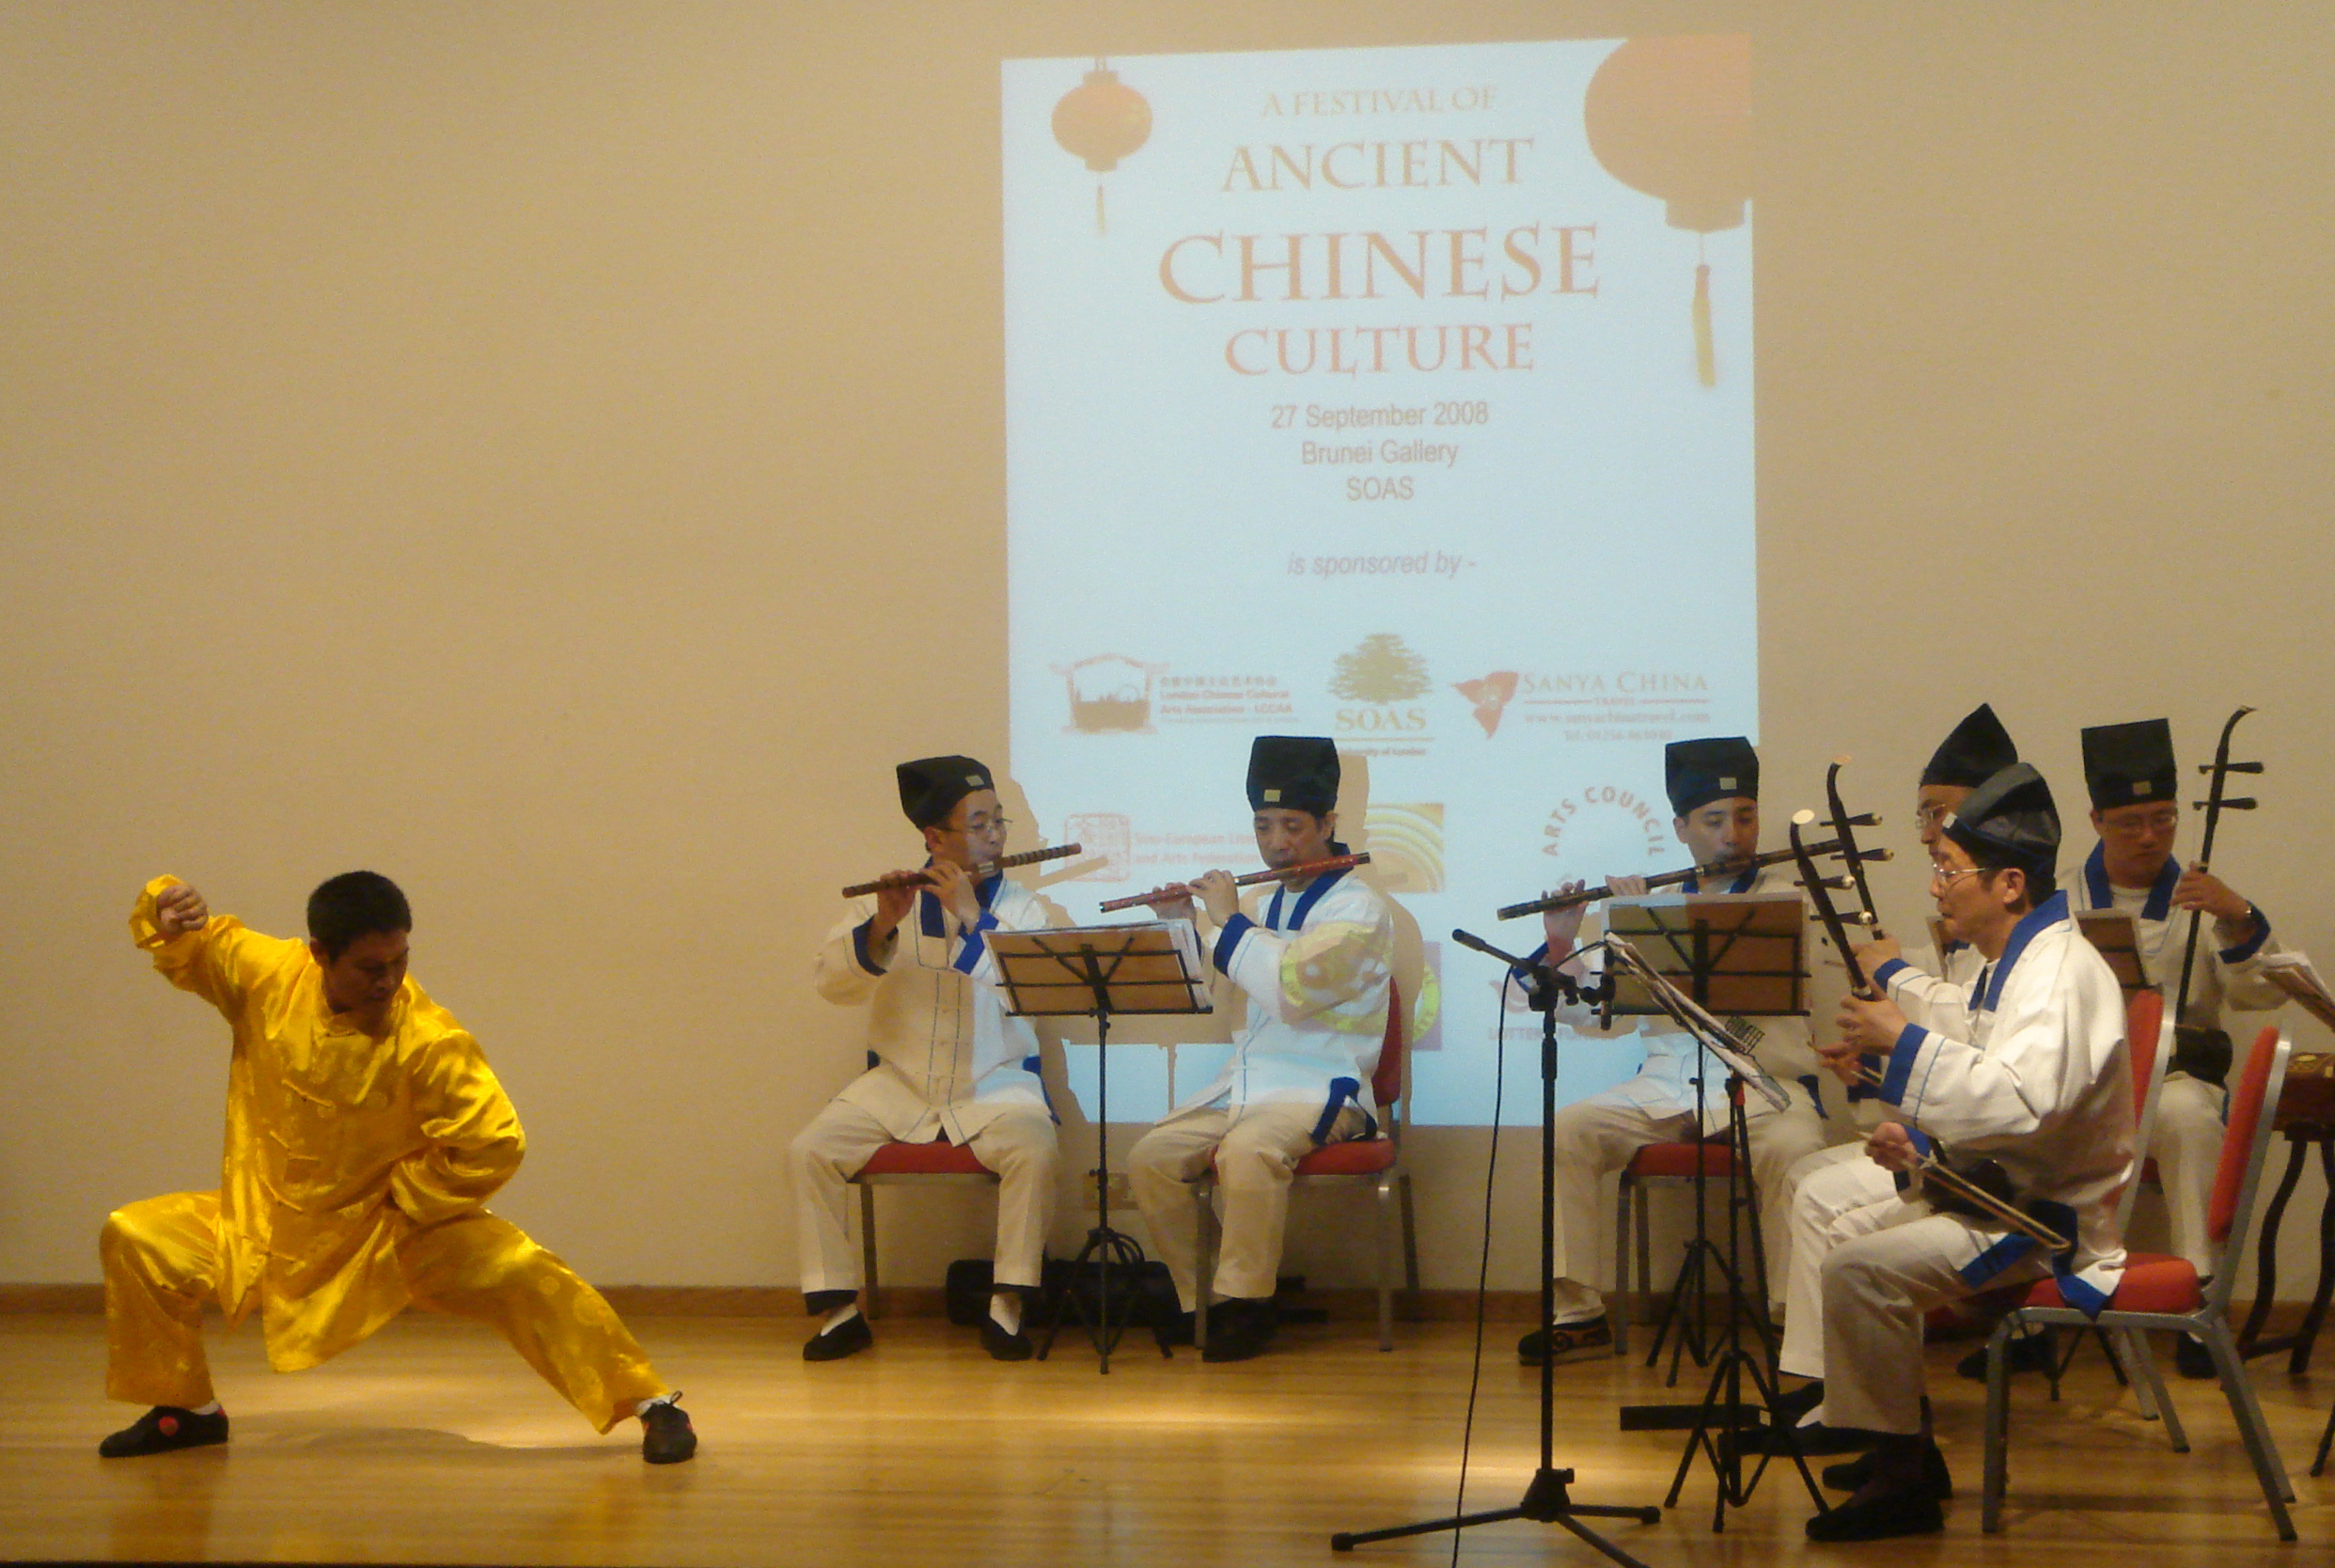 Shifu Liu performs tai ji accompanied by a Doaist Orchestra playing ancient Chinense instruments